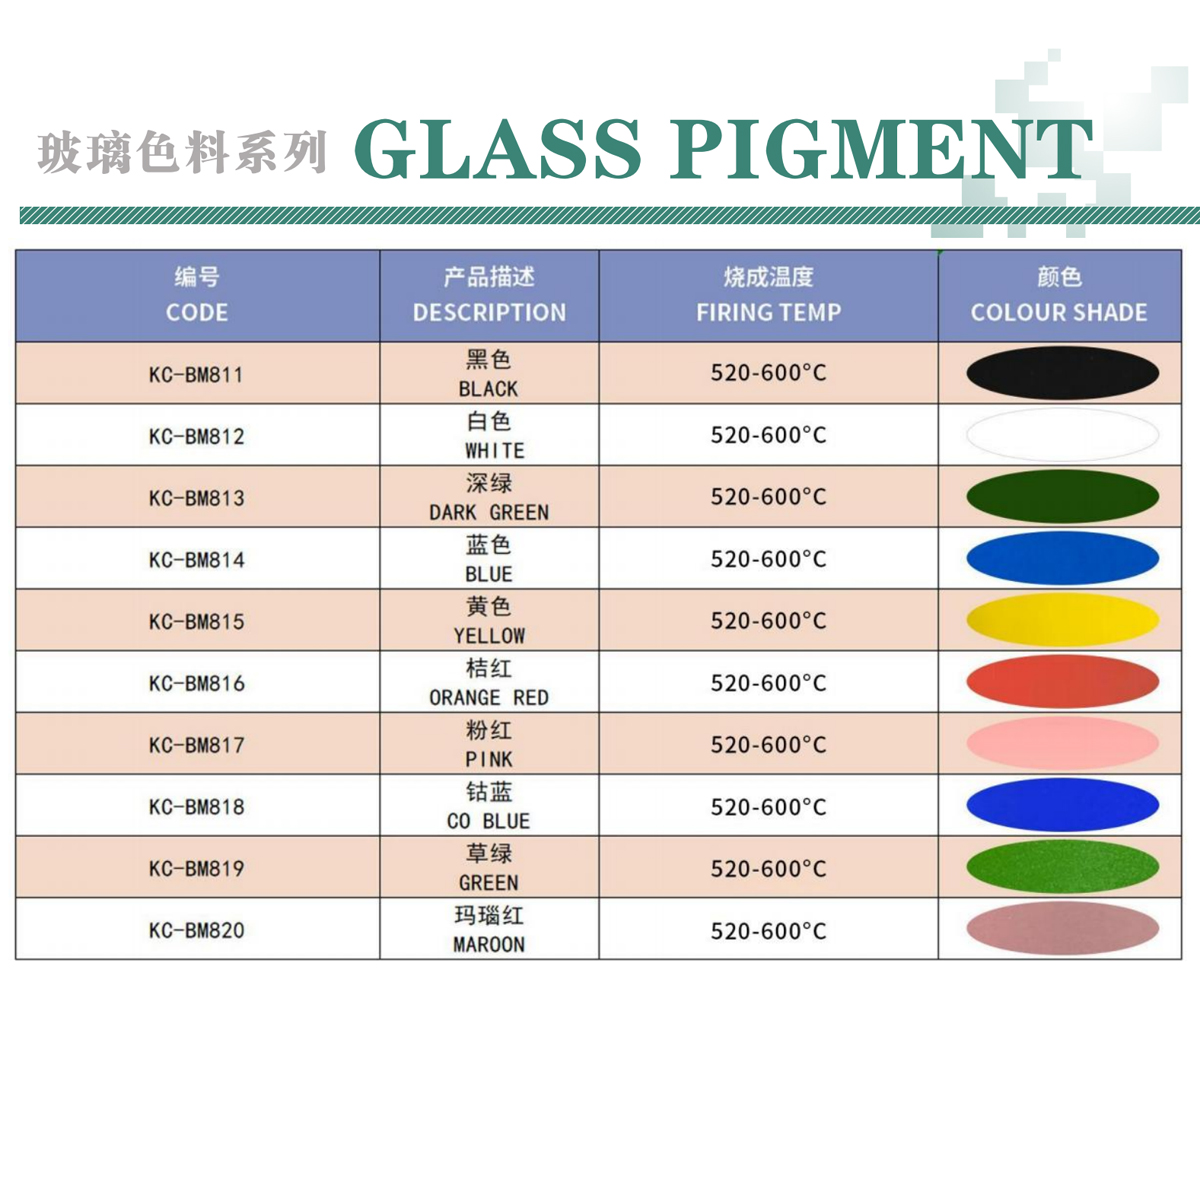 glass pigment1